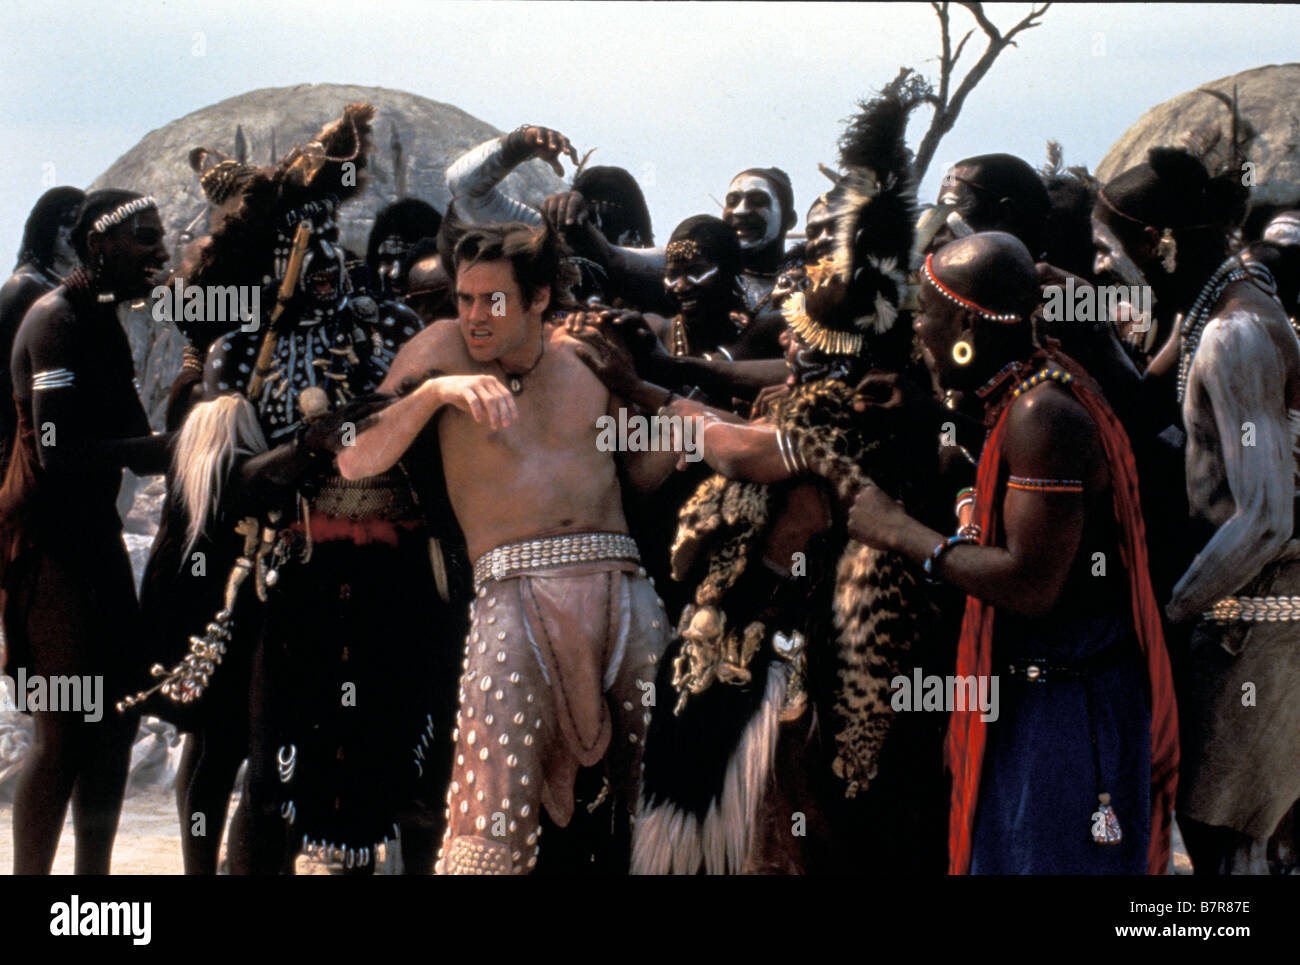 Ace Ventura: When Nature Calls  Year: 1995 USA Director : Steve Oedekerk Jim Carrey Stock Photo